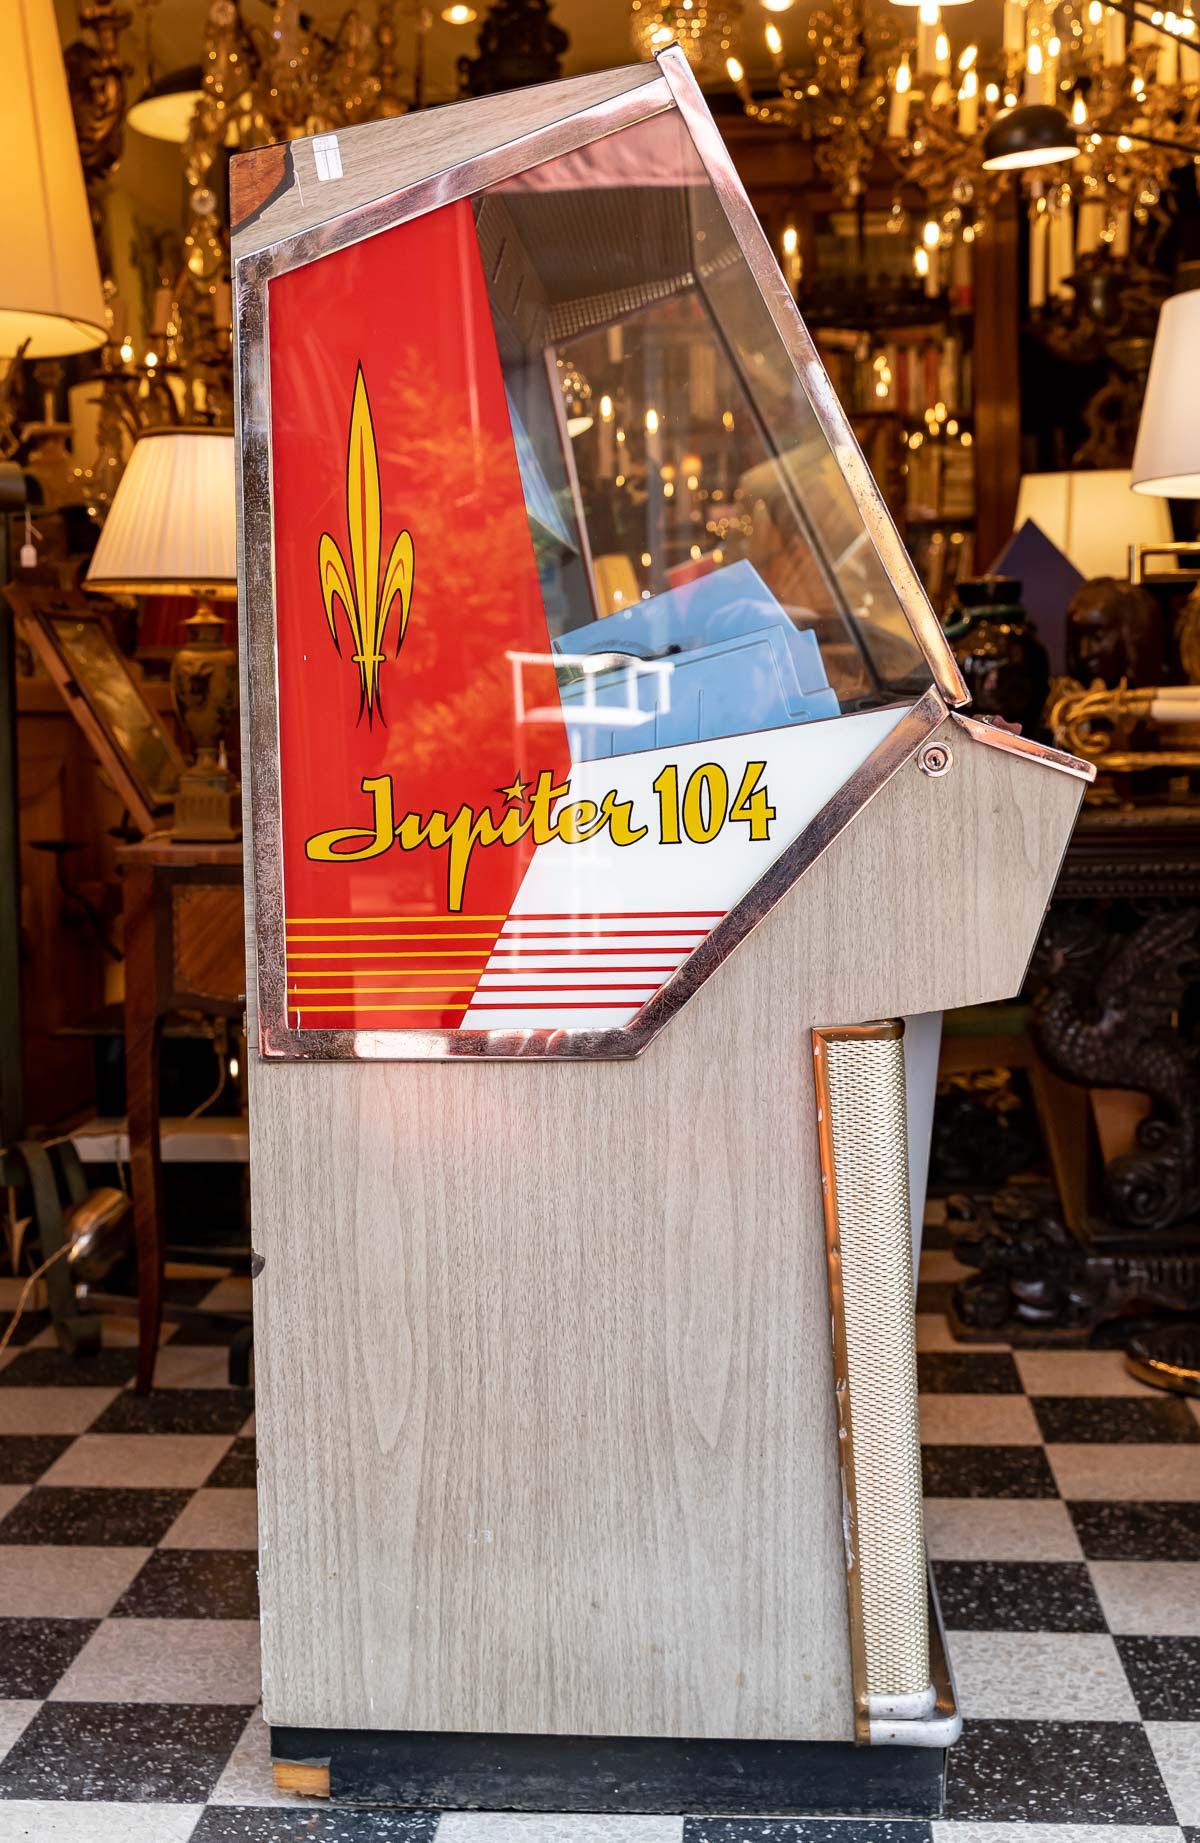 Jukebox Jupiter 104, Year 1960.

Jukebox Jupiter 104, need to be fully restored, year 1960.

Dimensions: h: 142cm, w: 87cm, d: 66cm